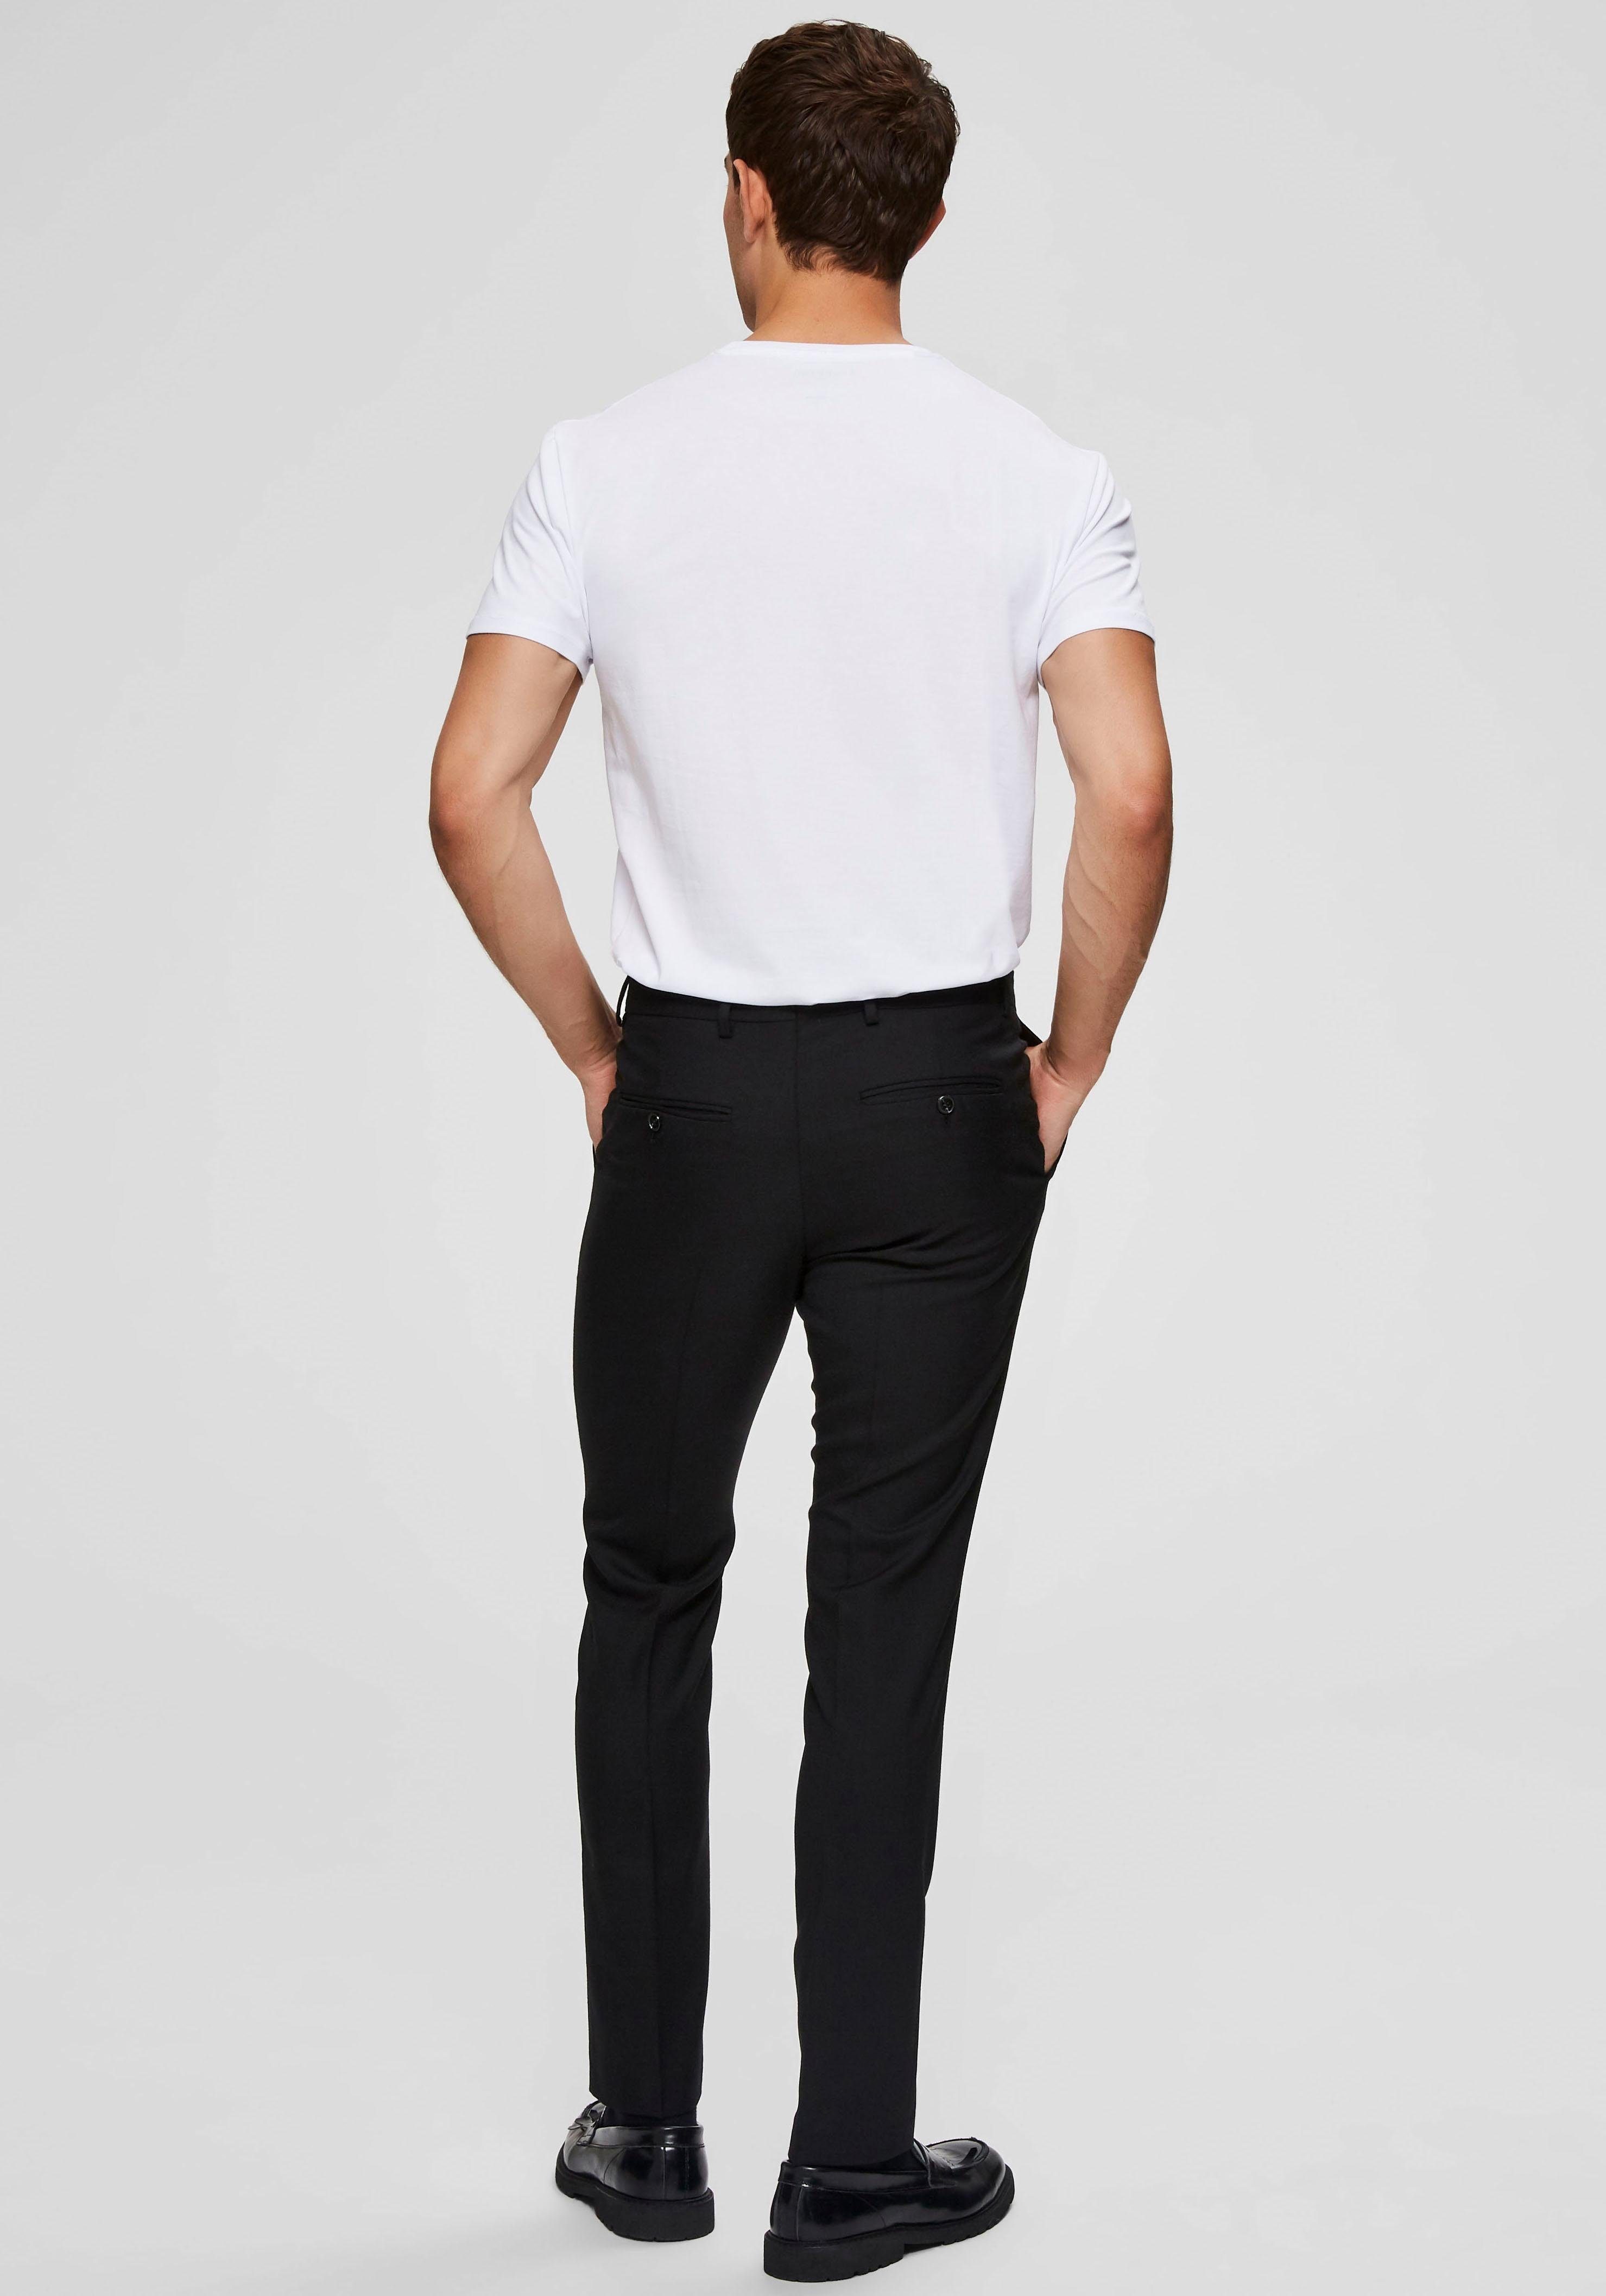 White Bright Rundhalsshirt HOMME T-Shirt Basic SELECTED